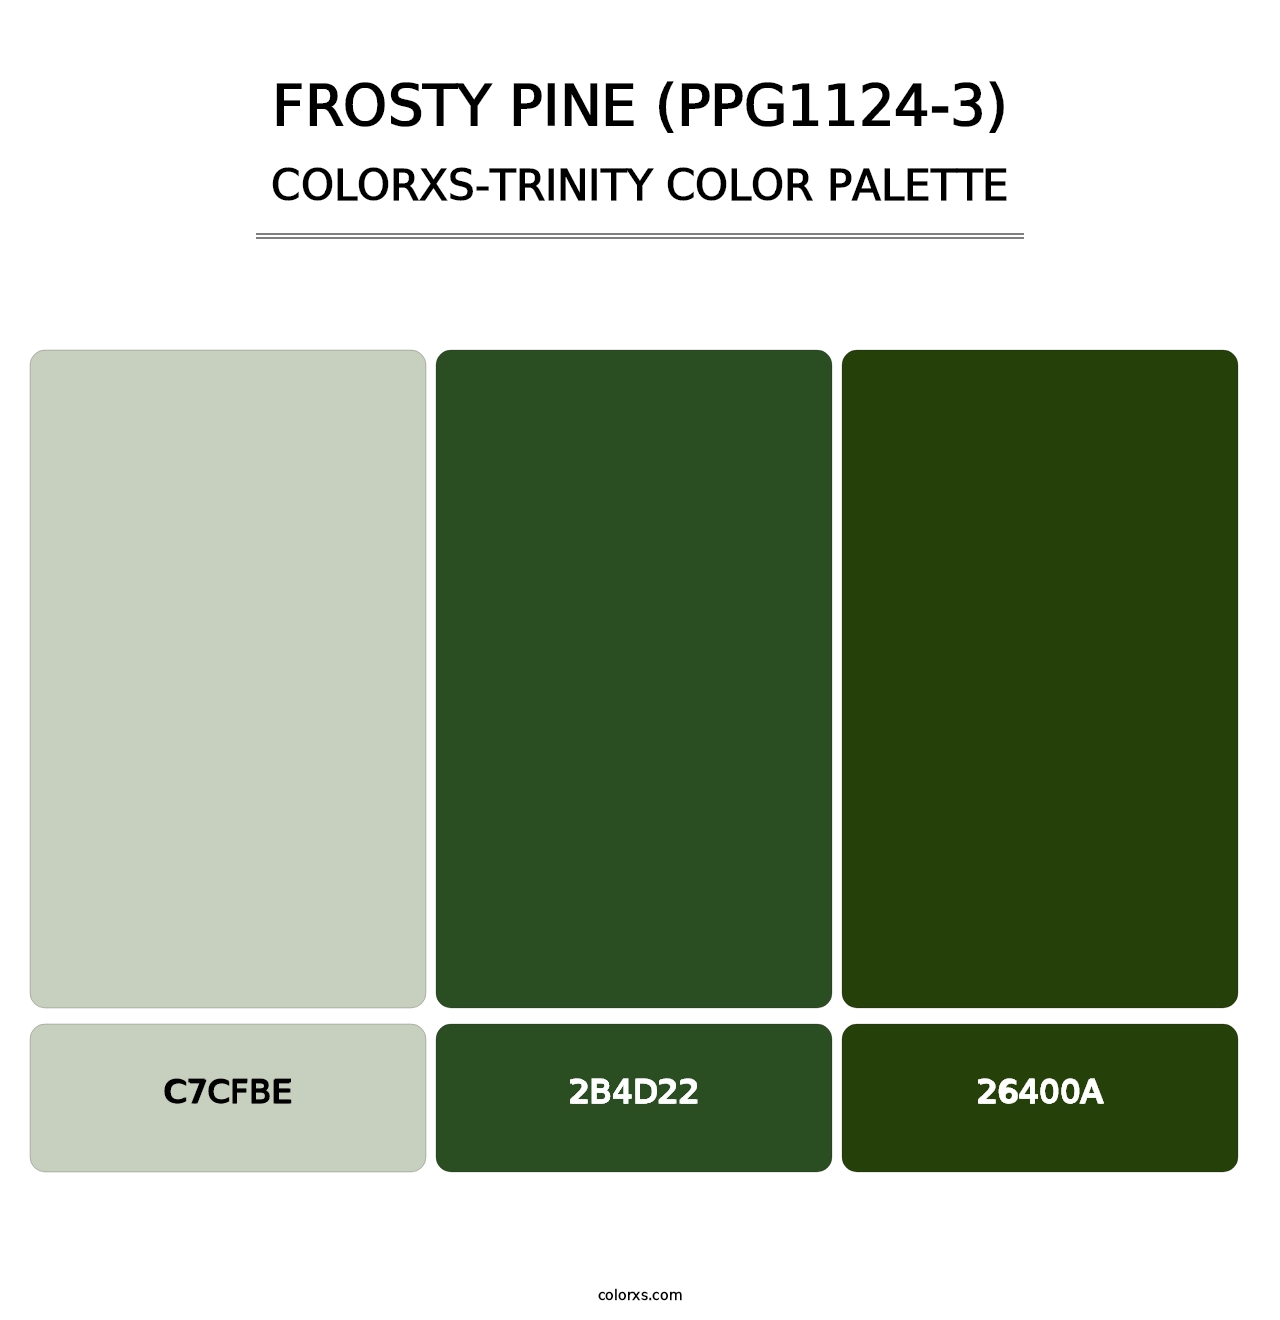 Frosty Pine (PPG1124-3) - Colorxs Trinity Palette